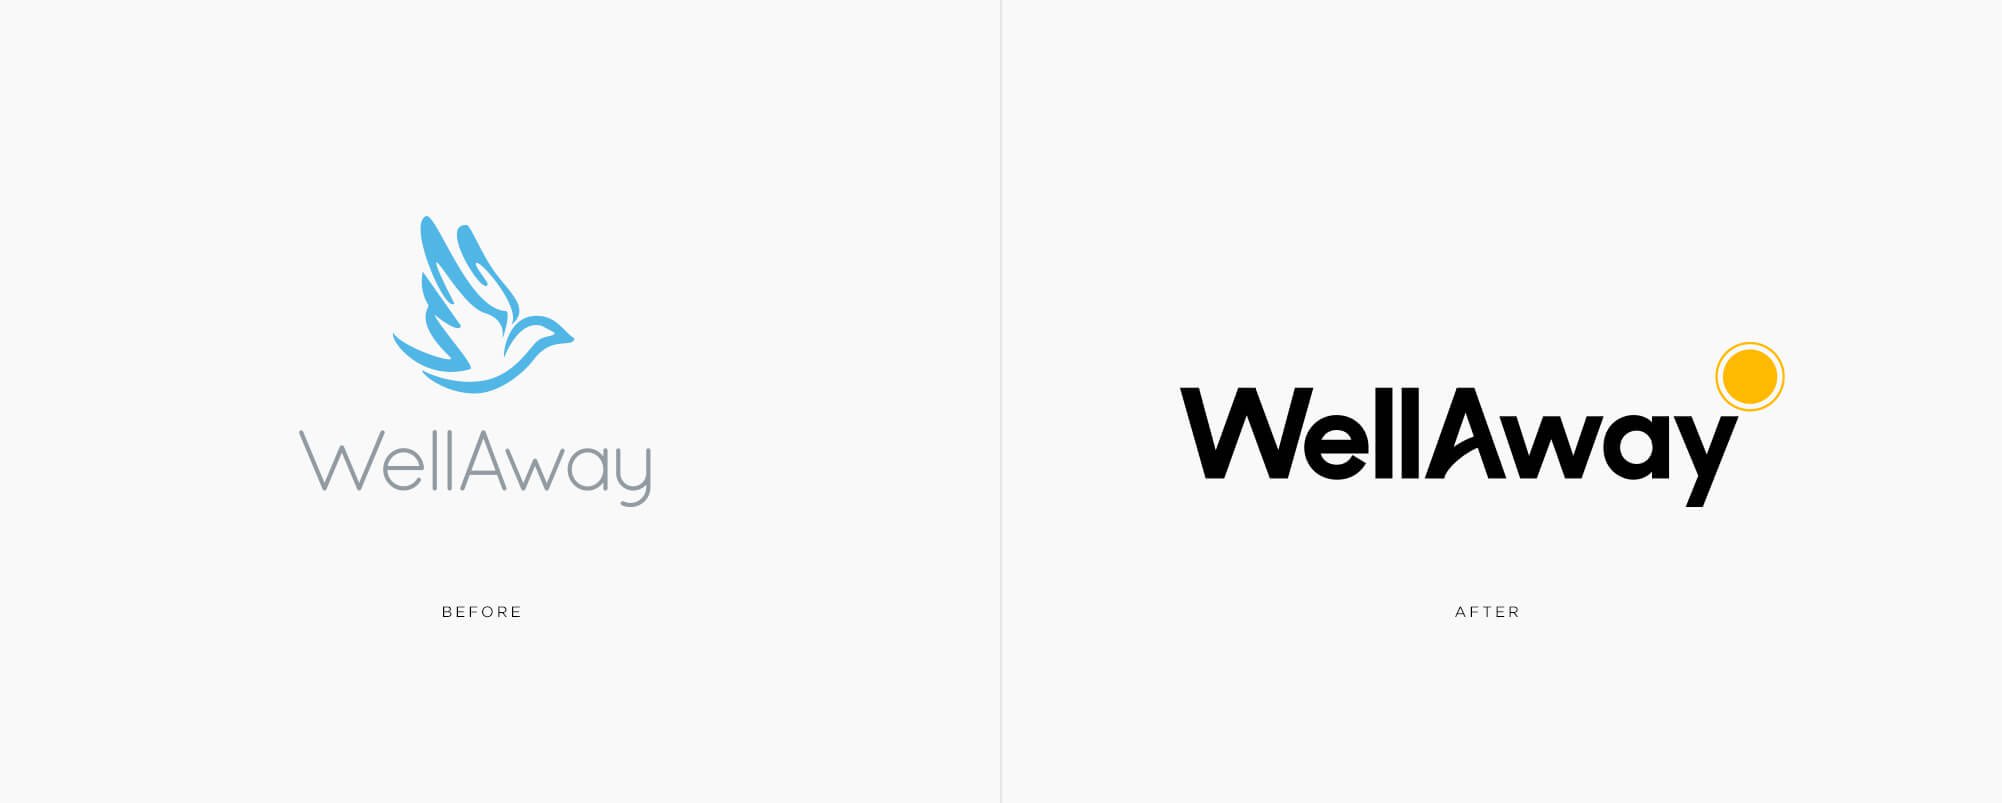 Jacober rebranding of WellAway Global Health Insurance, Image before and after of Wellaway logo